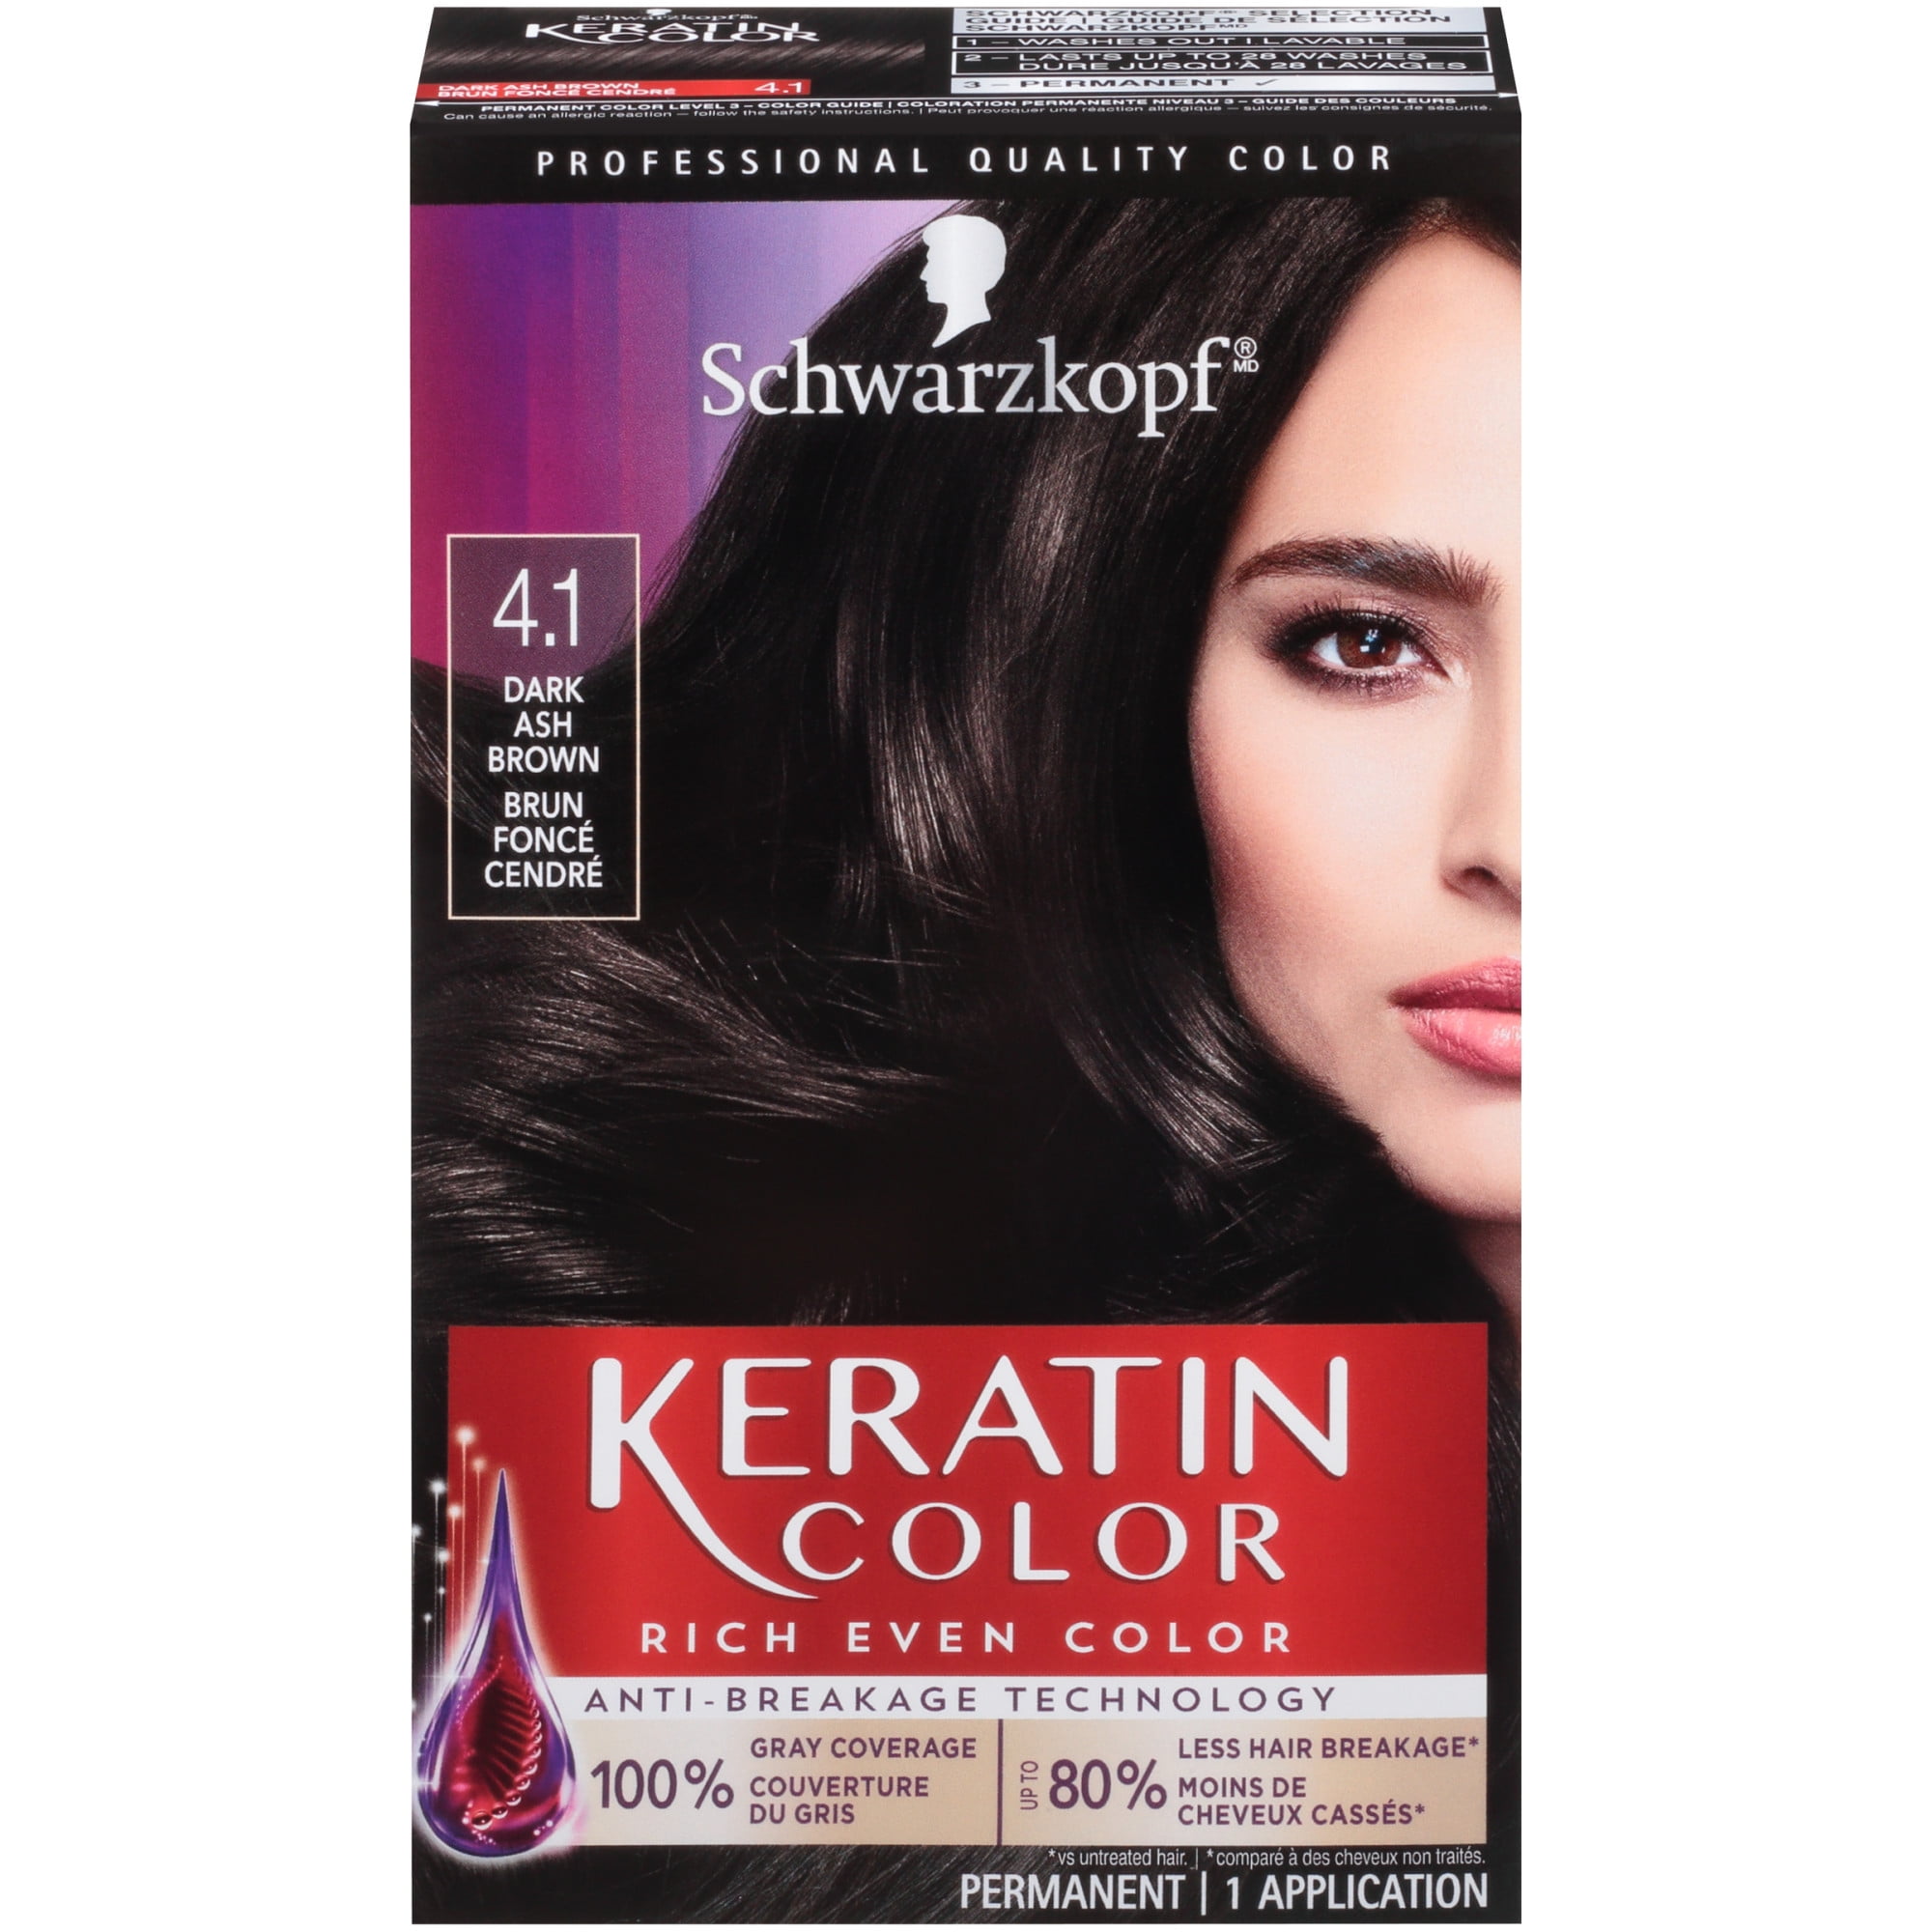 Schwarzkopf Keratin Color Permanent Hair Color Cream, 4.1 Dark Ash Brown -  Walmart.com